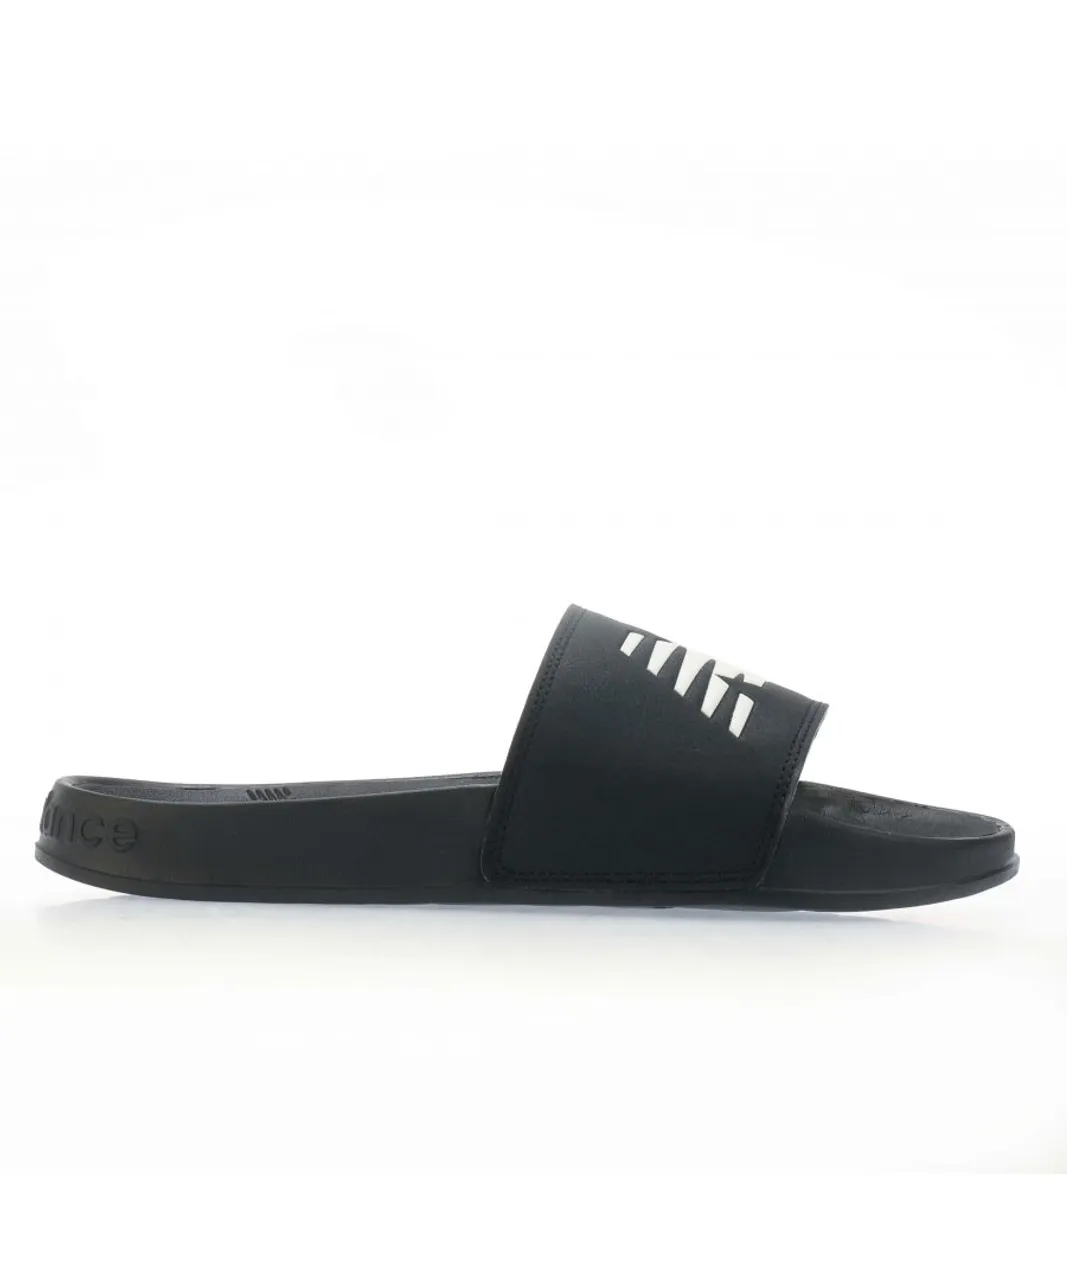 New Balance Mens 200 Slide Sandals in Black-White Textile